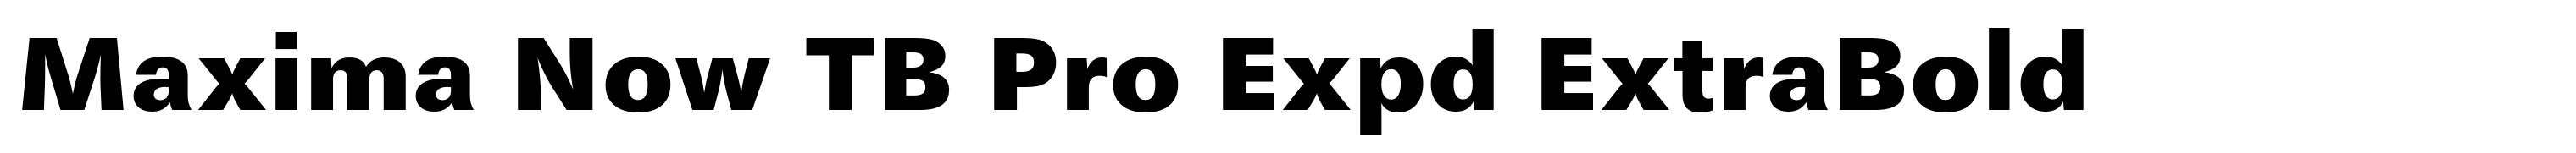 Maxima Now TB Pro Expd ExtraBold